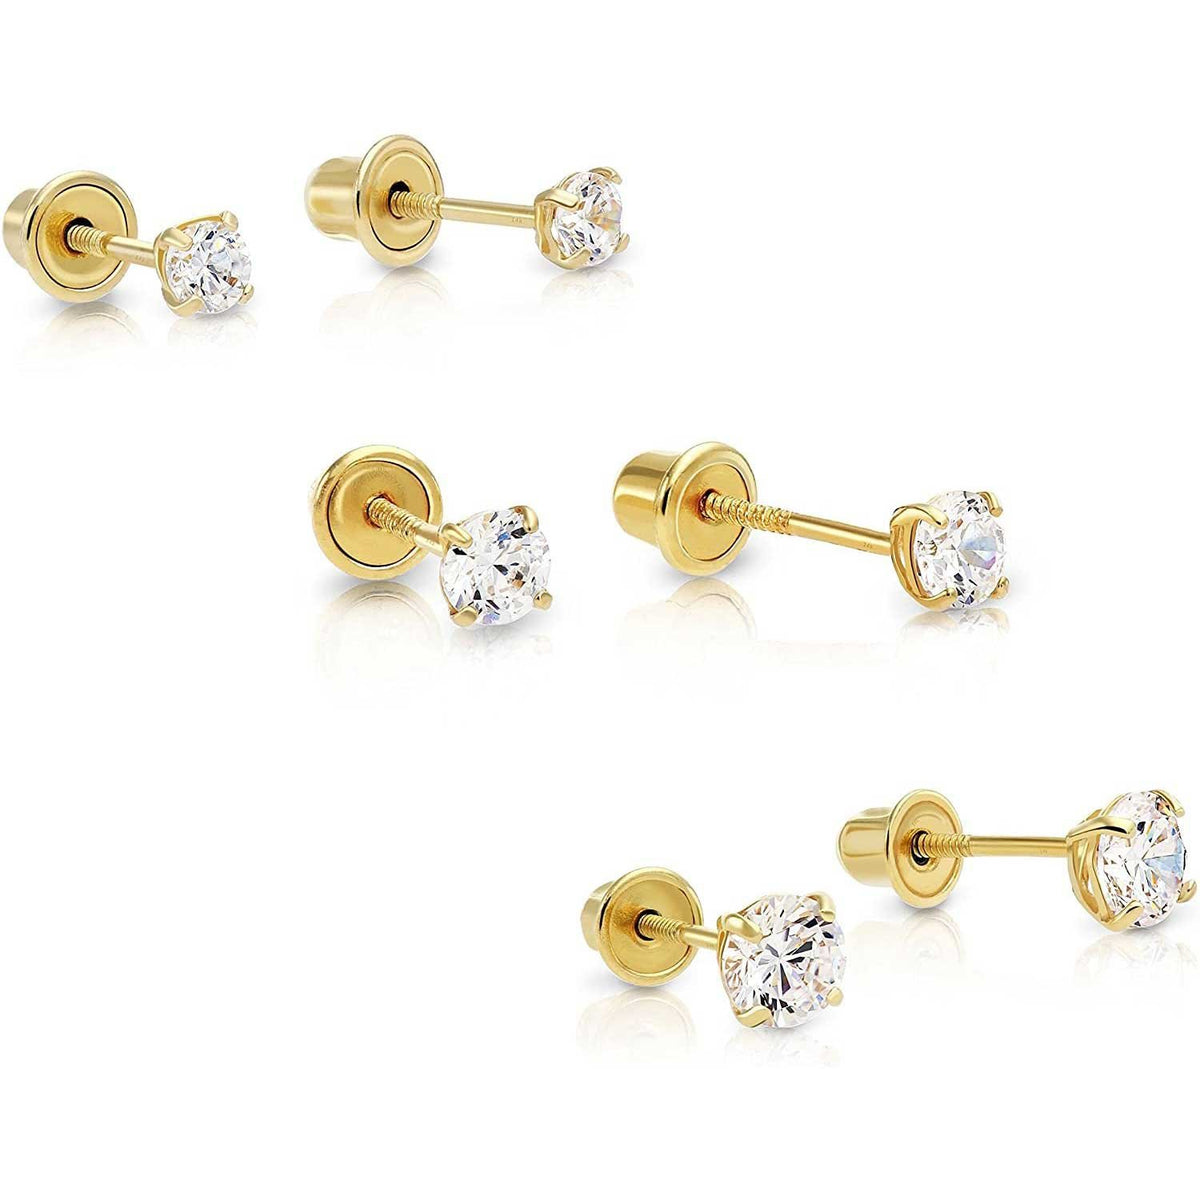 3mm Cubic Zirconia Solitaire Stud Piercing Earrings in 14K Solid Gold -  Short Post